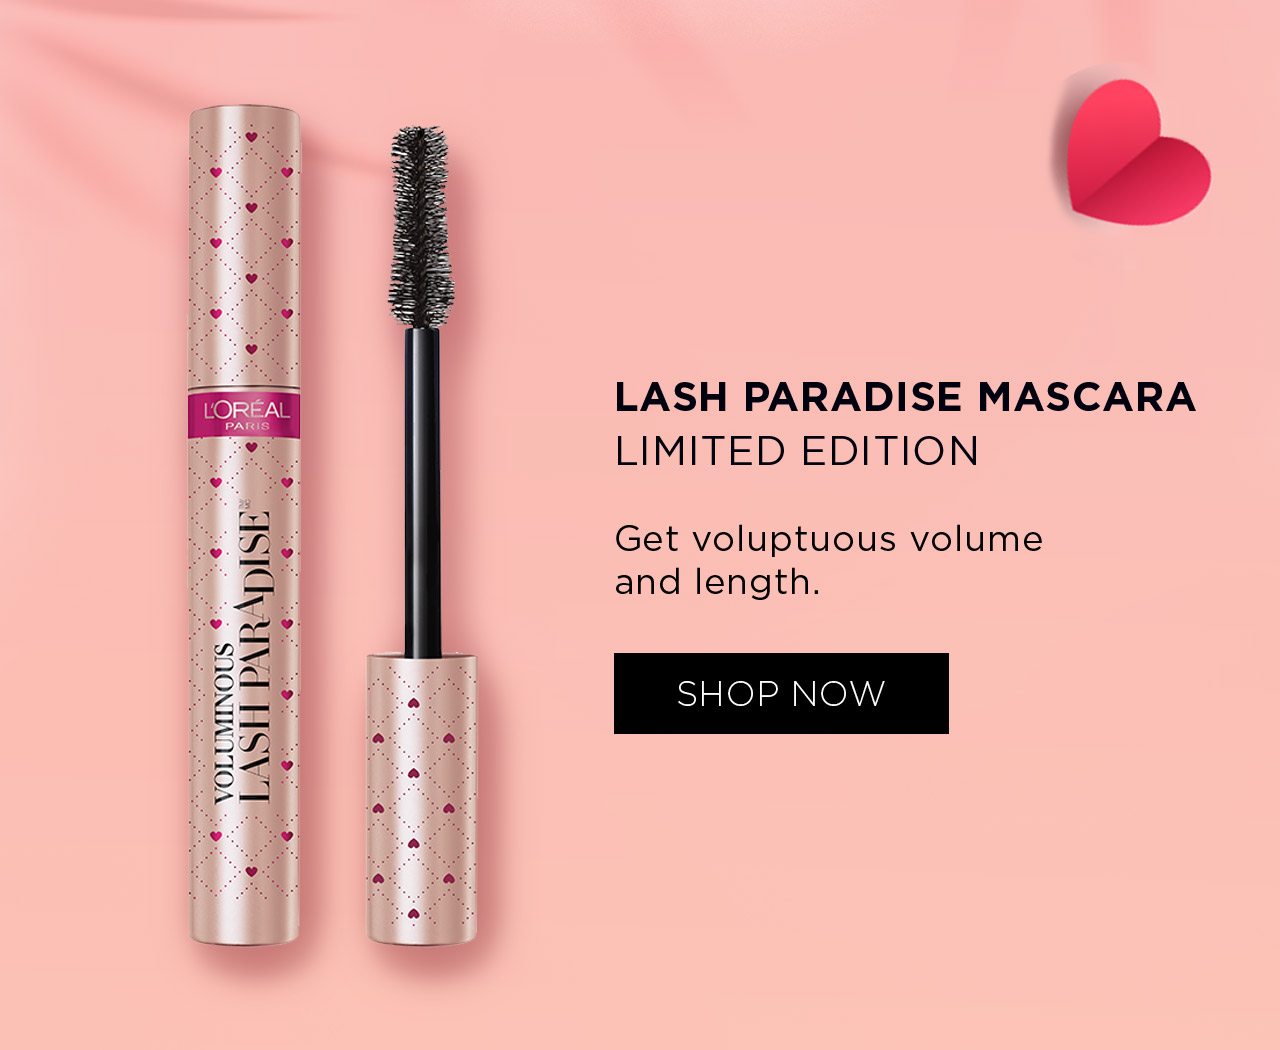 Lash paradise mascara - Limited edition - Shop now